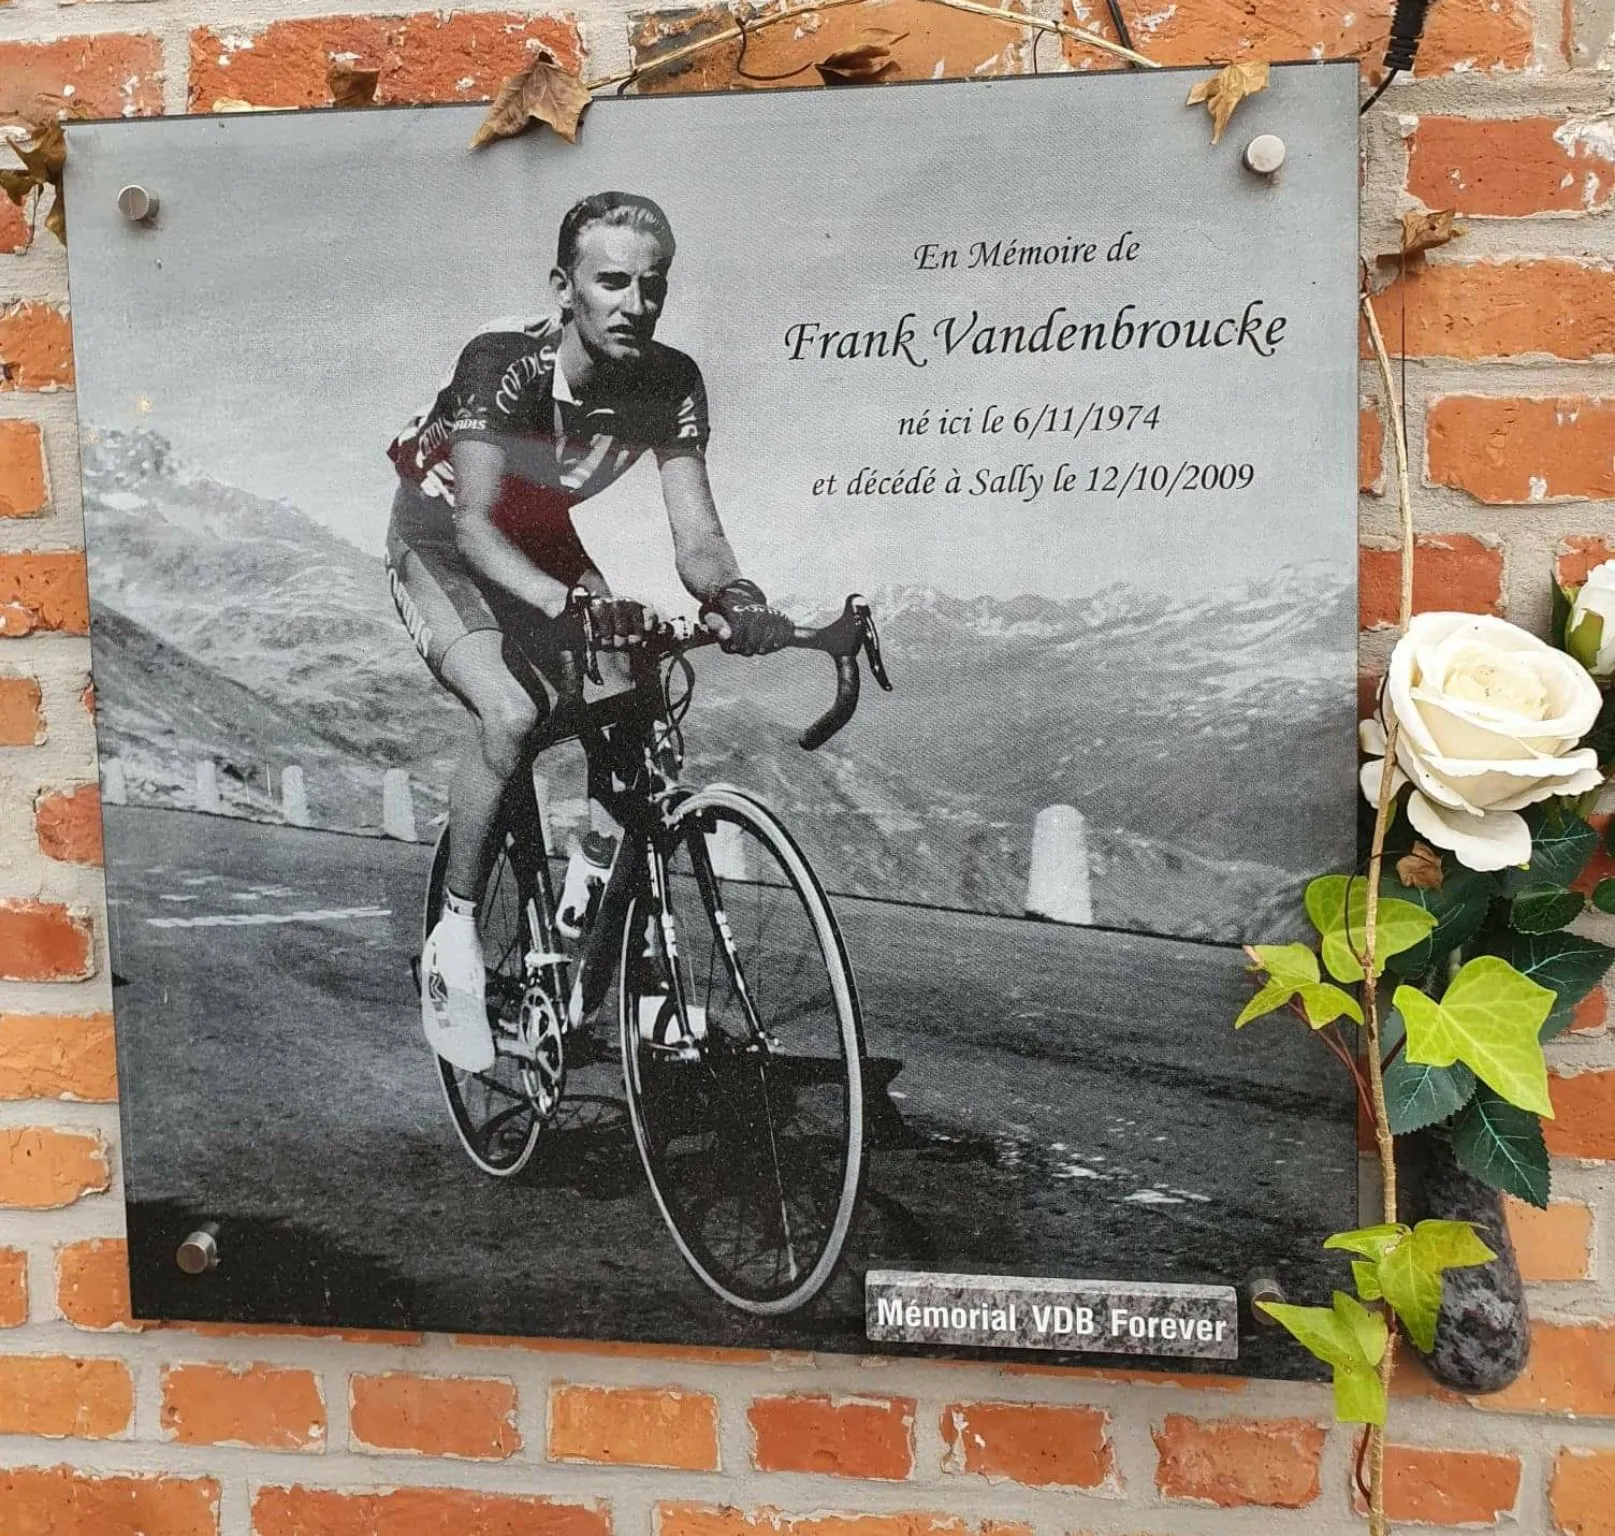 Photo showing: Memorial VDB Forever - Frank Vandenbroucke